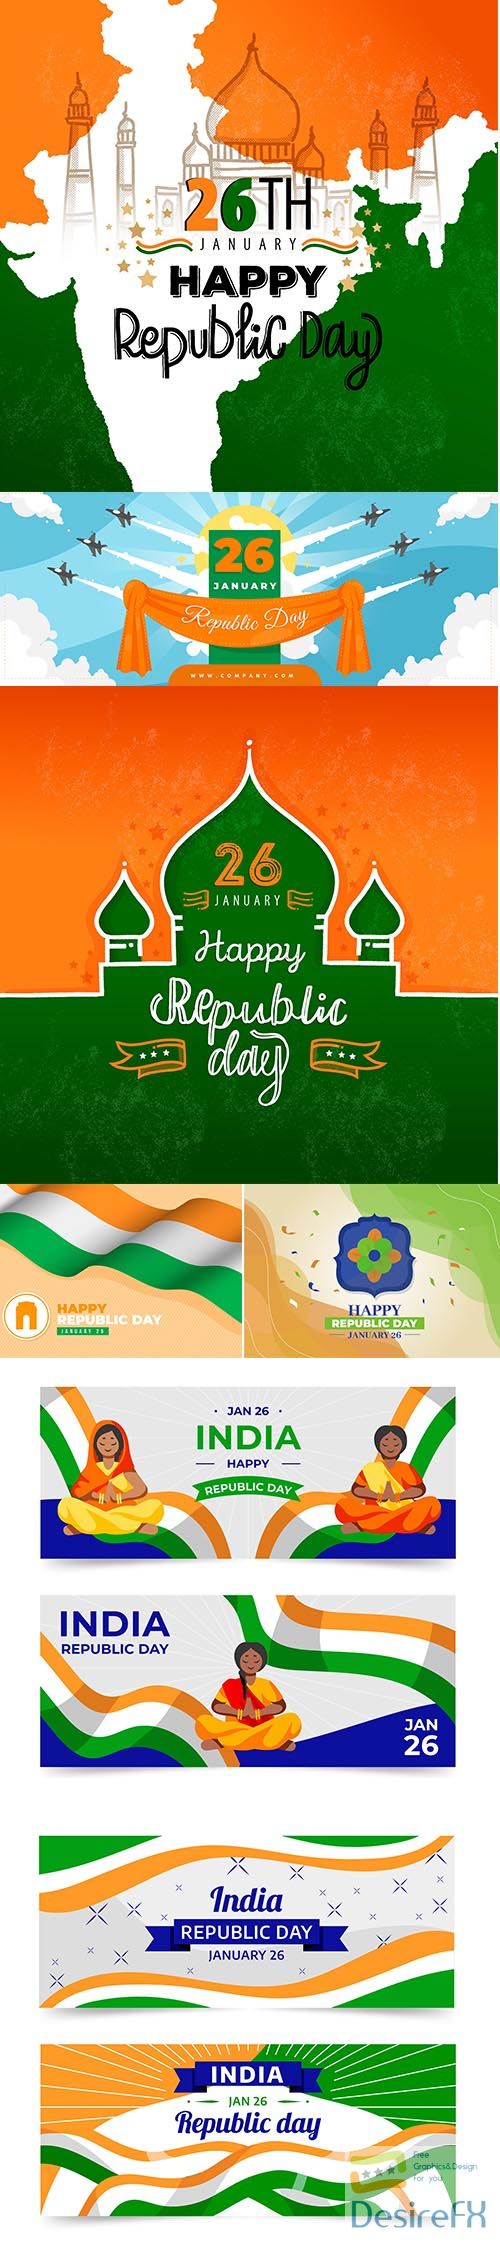 Flat design india republic day banner